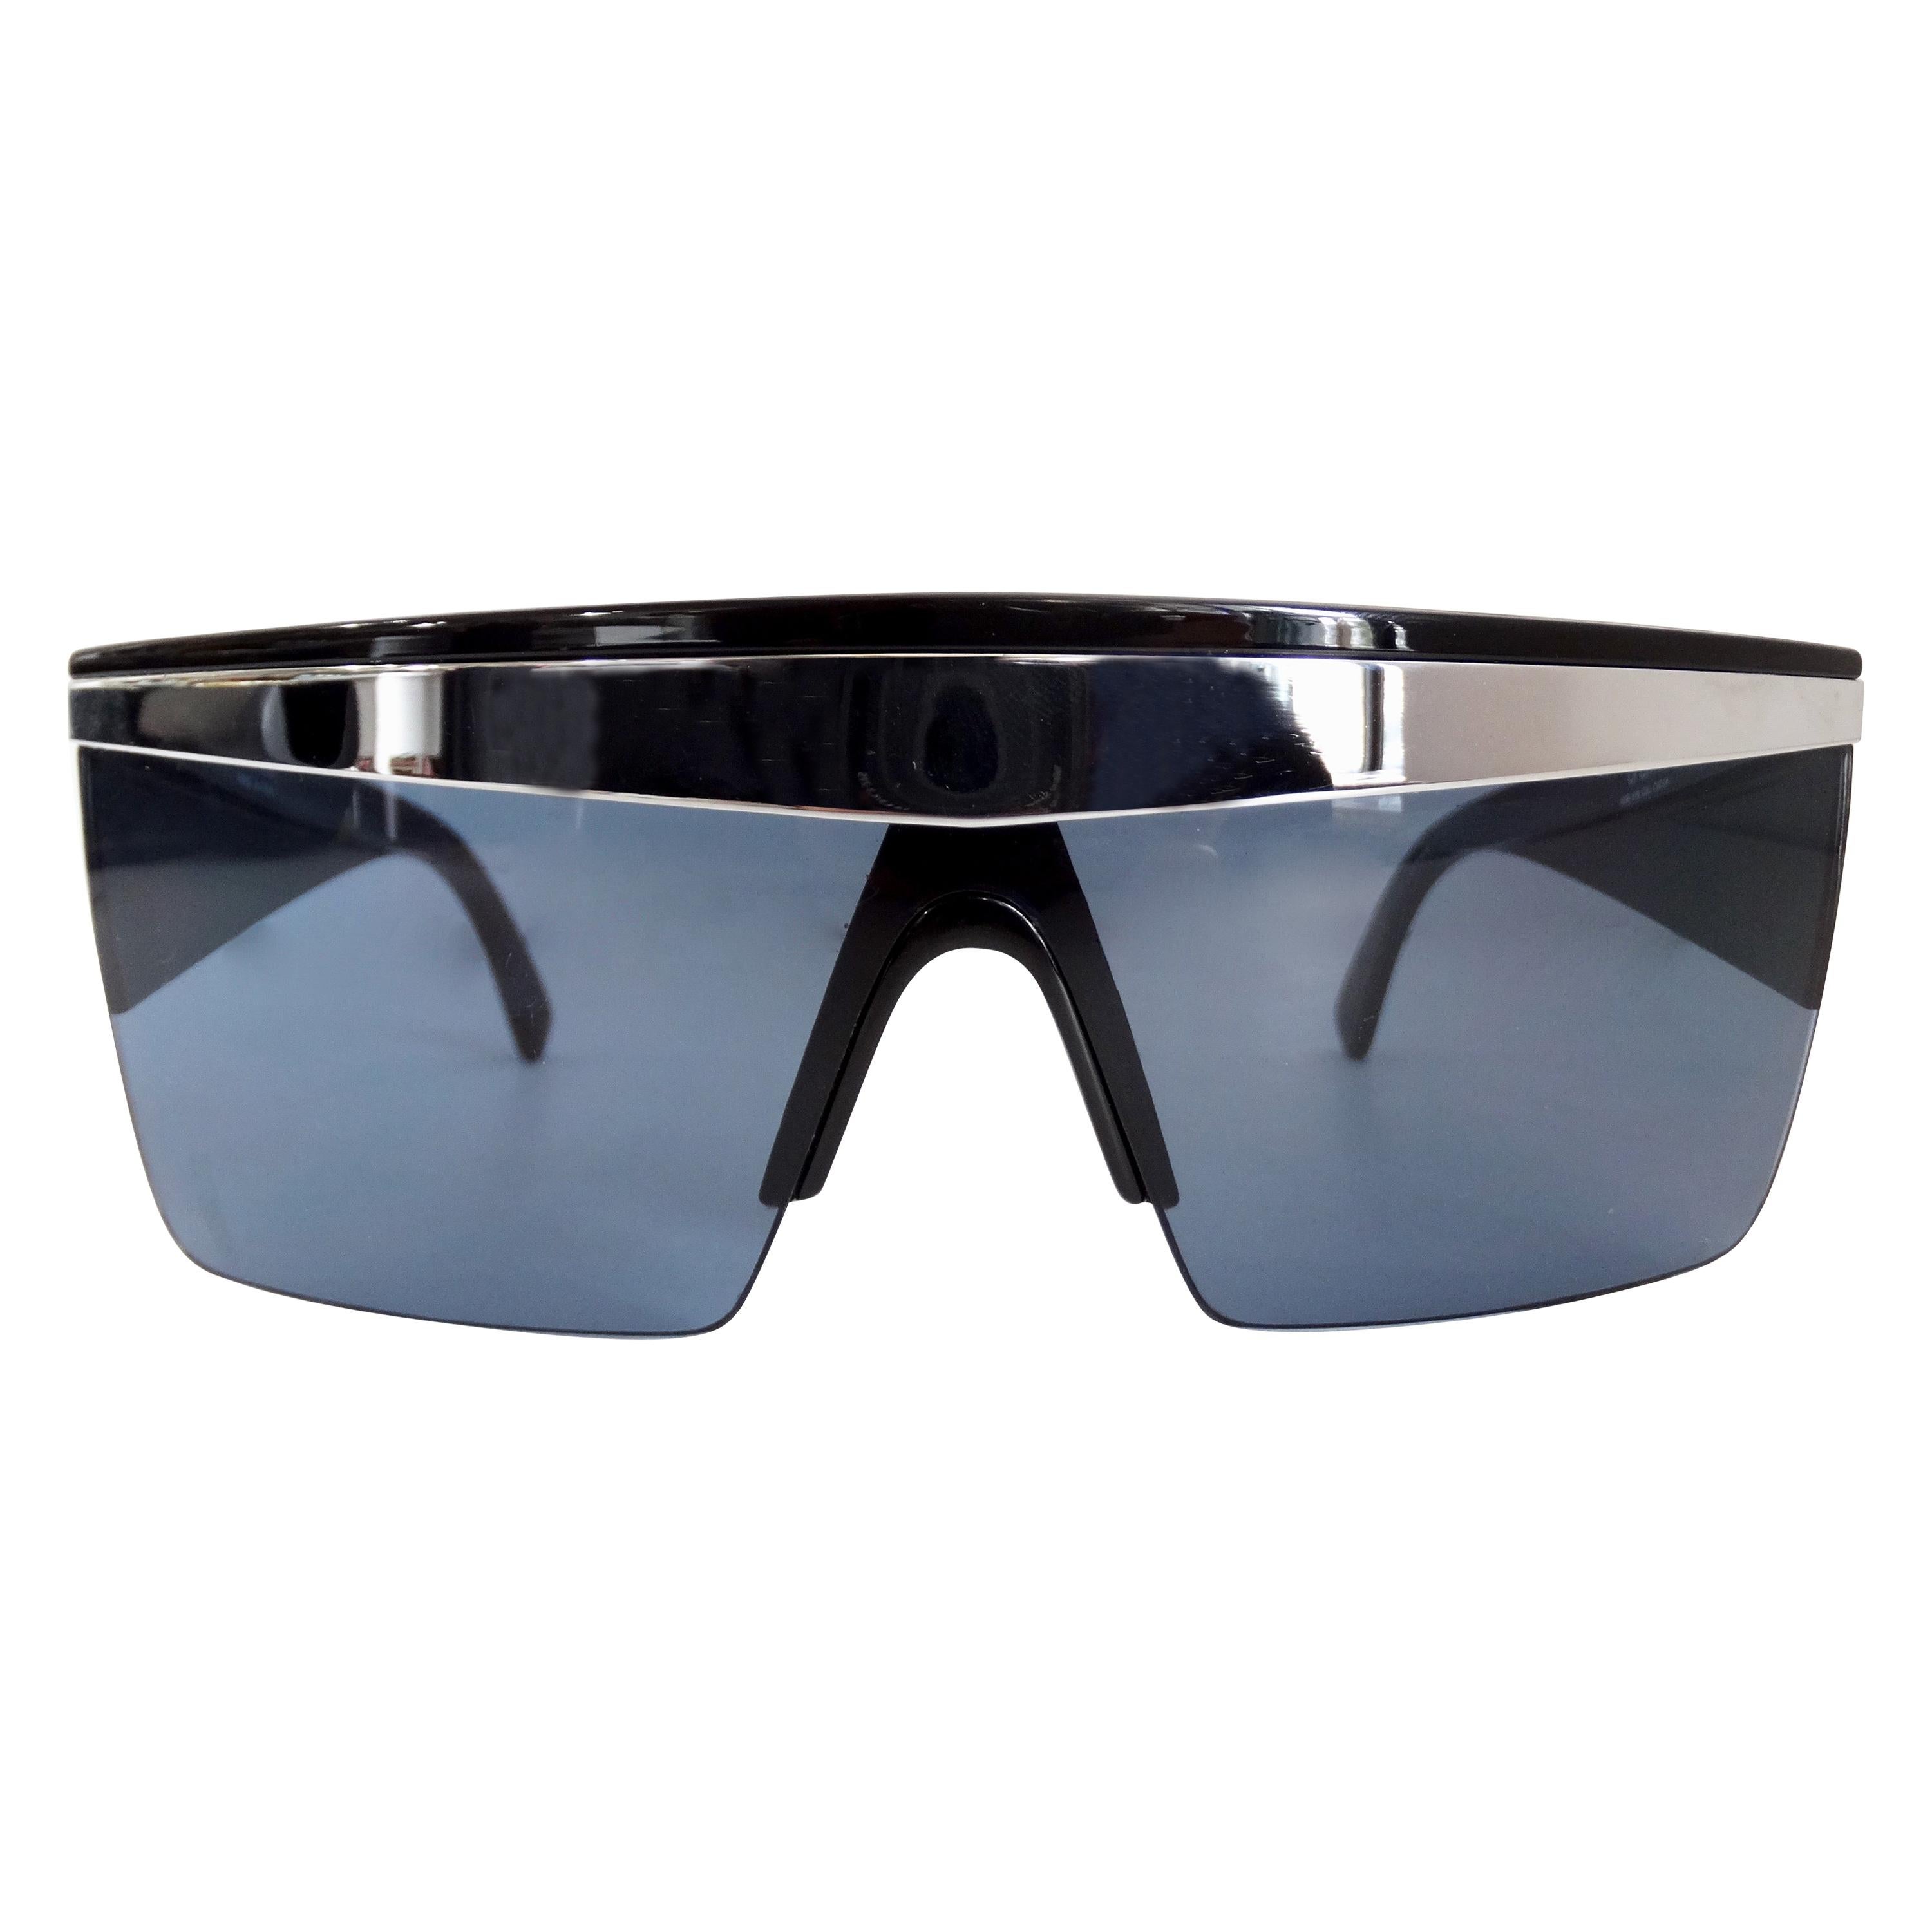 Gianni Versace 1980s Silver Update Sunglasses